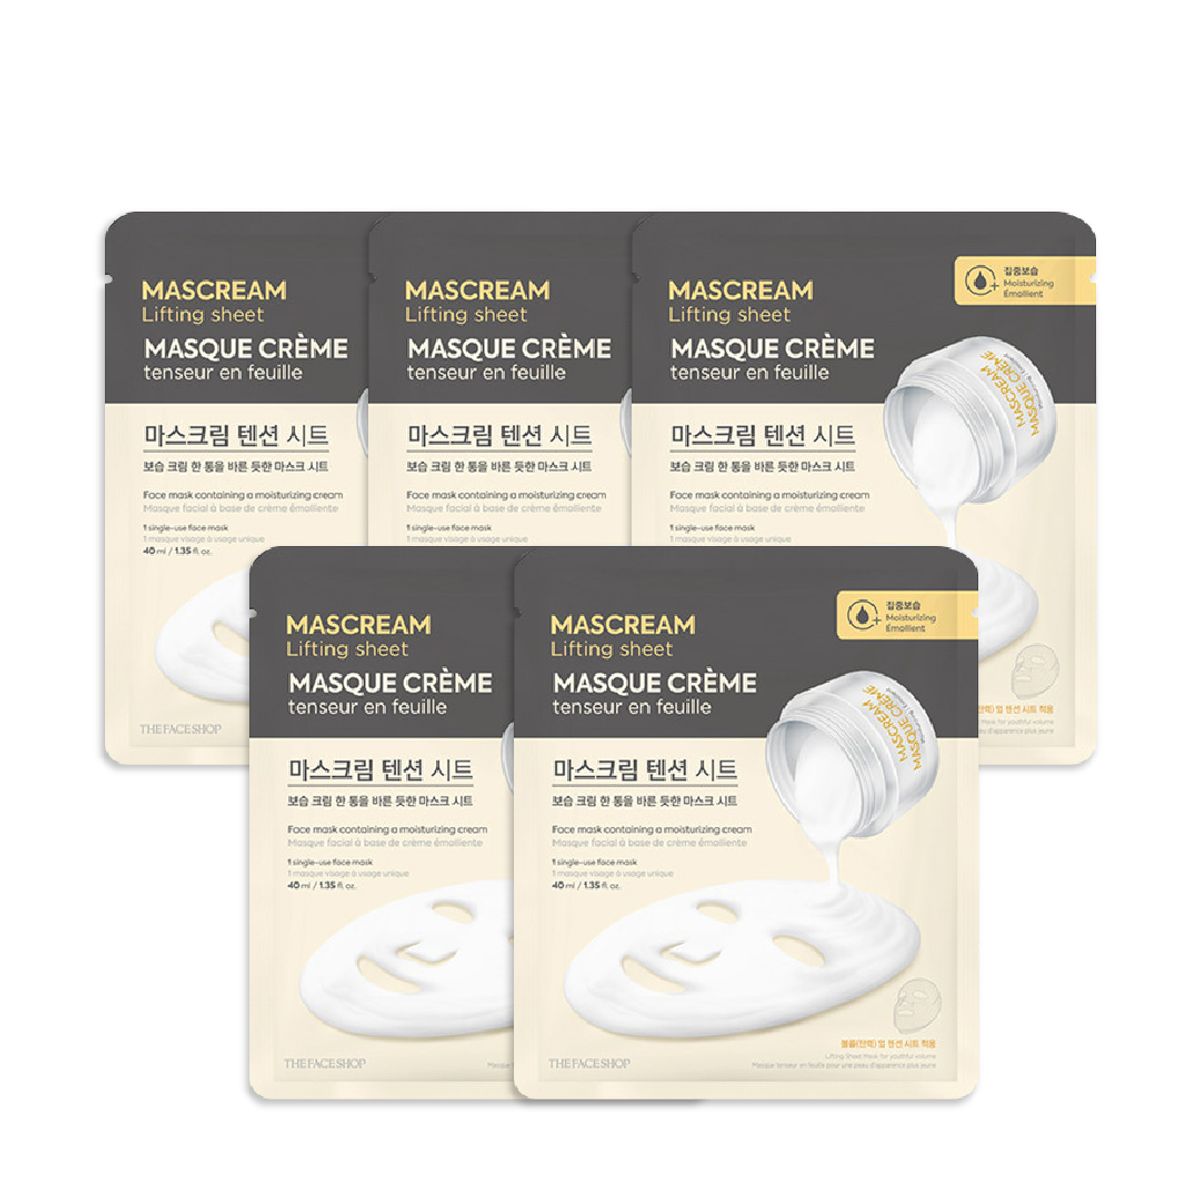 gift-set-05-mat-na-cap-am-chuyen-sau-deeply-moisturizing-mascream-lifting-sheet-40ml-1